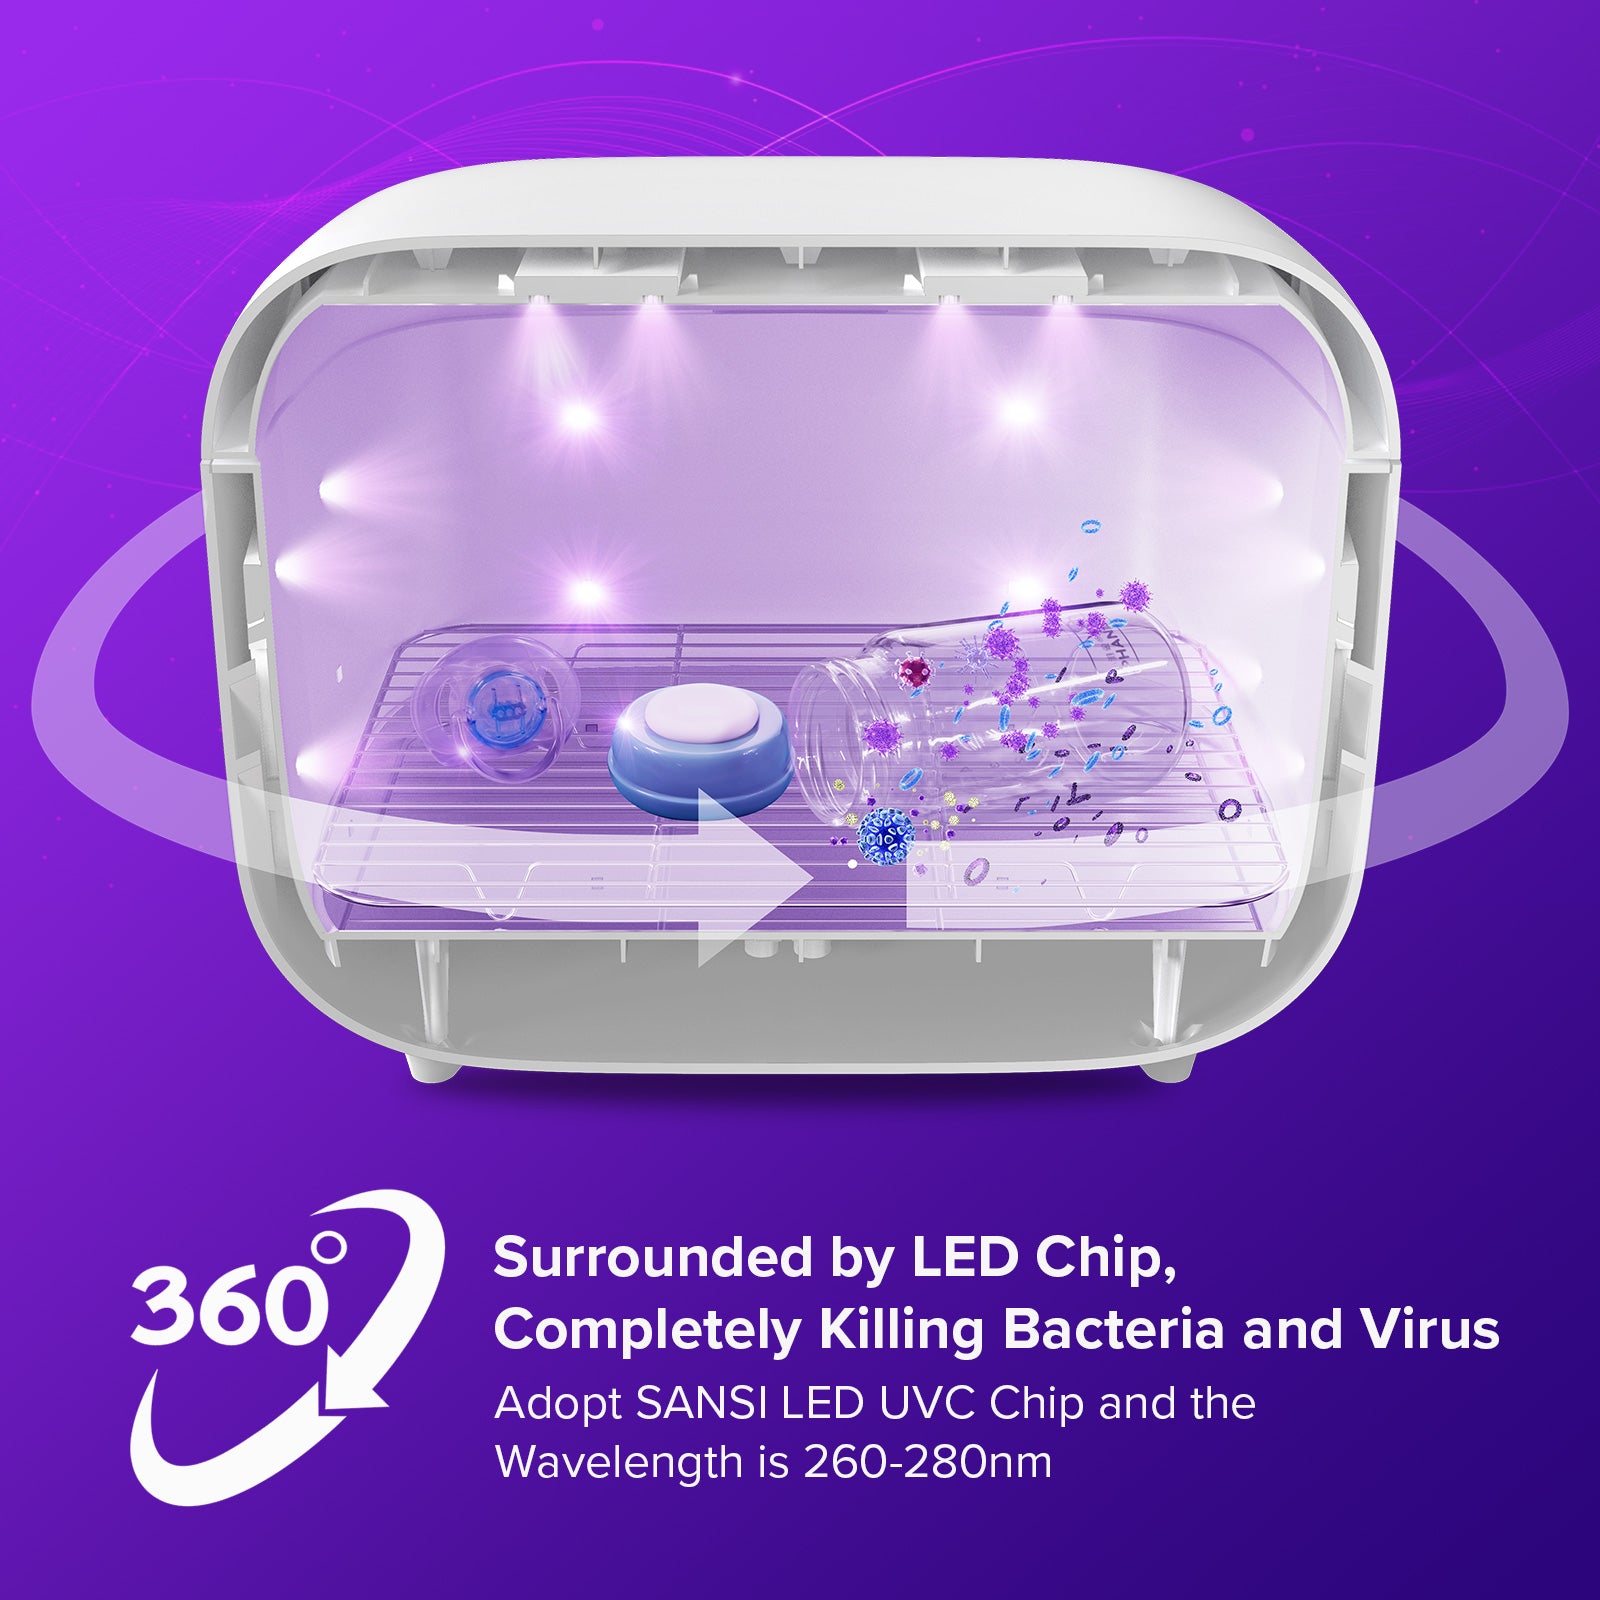 15W UV Light Sanitizer Box (US ONLY)